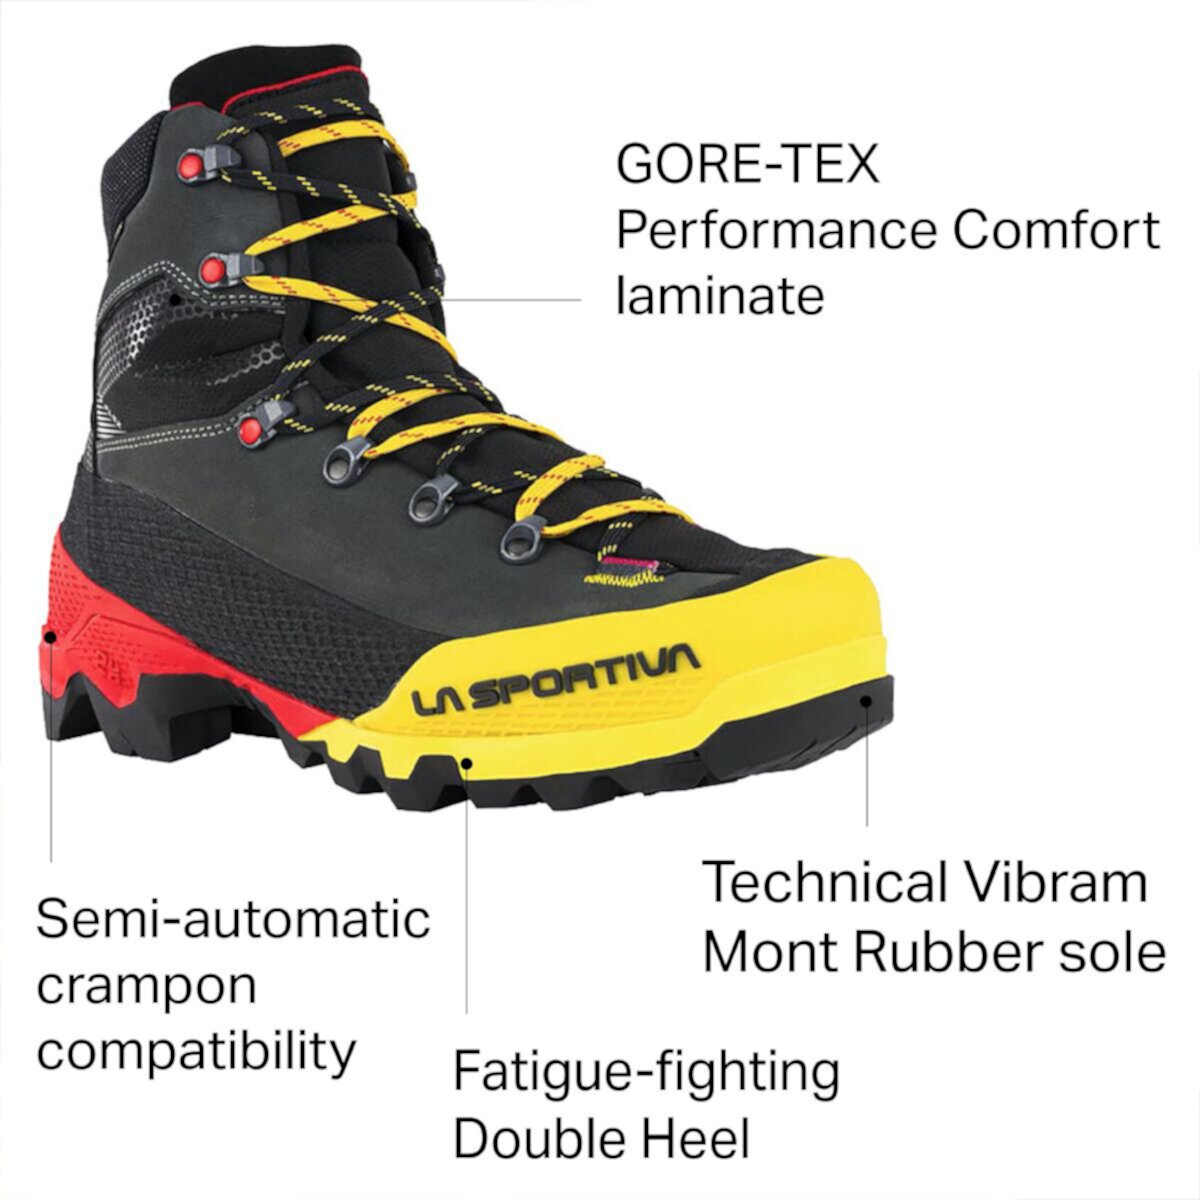 La Sportiva Aequilibrium Lt Gtx Mountaineering Boot - Women's on Sale ...